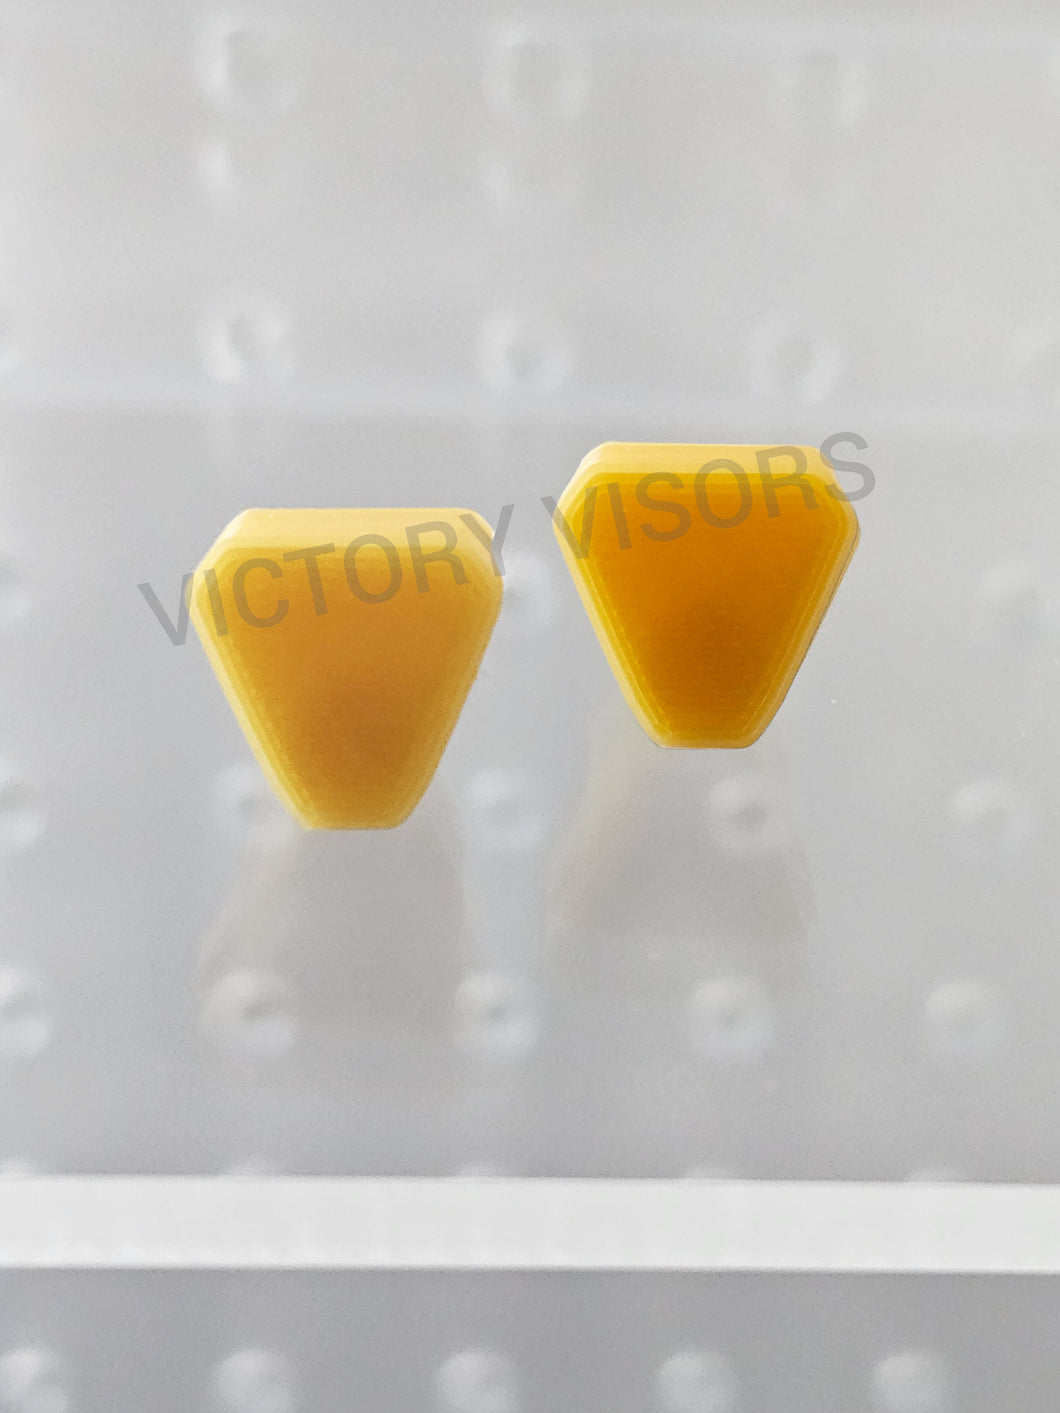 Yellow Mini Football visor clips from Victory Visors. Full metal threads. Mini Helmet Breaks. Football Memorabilia Collectors